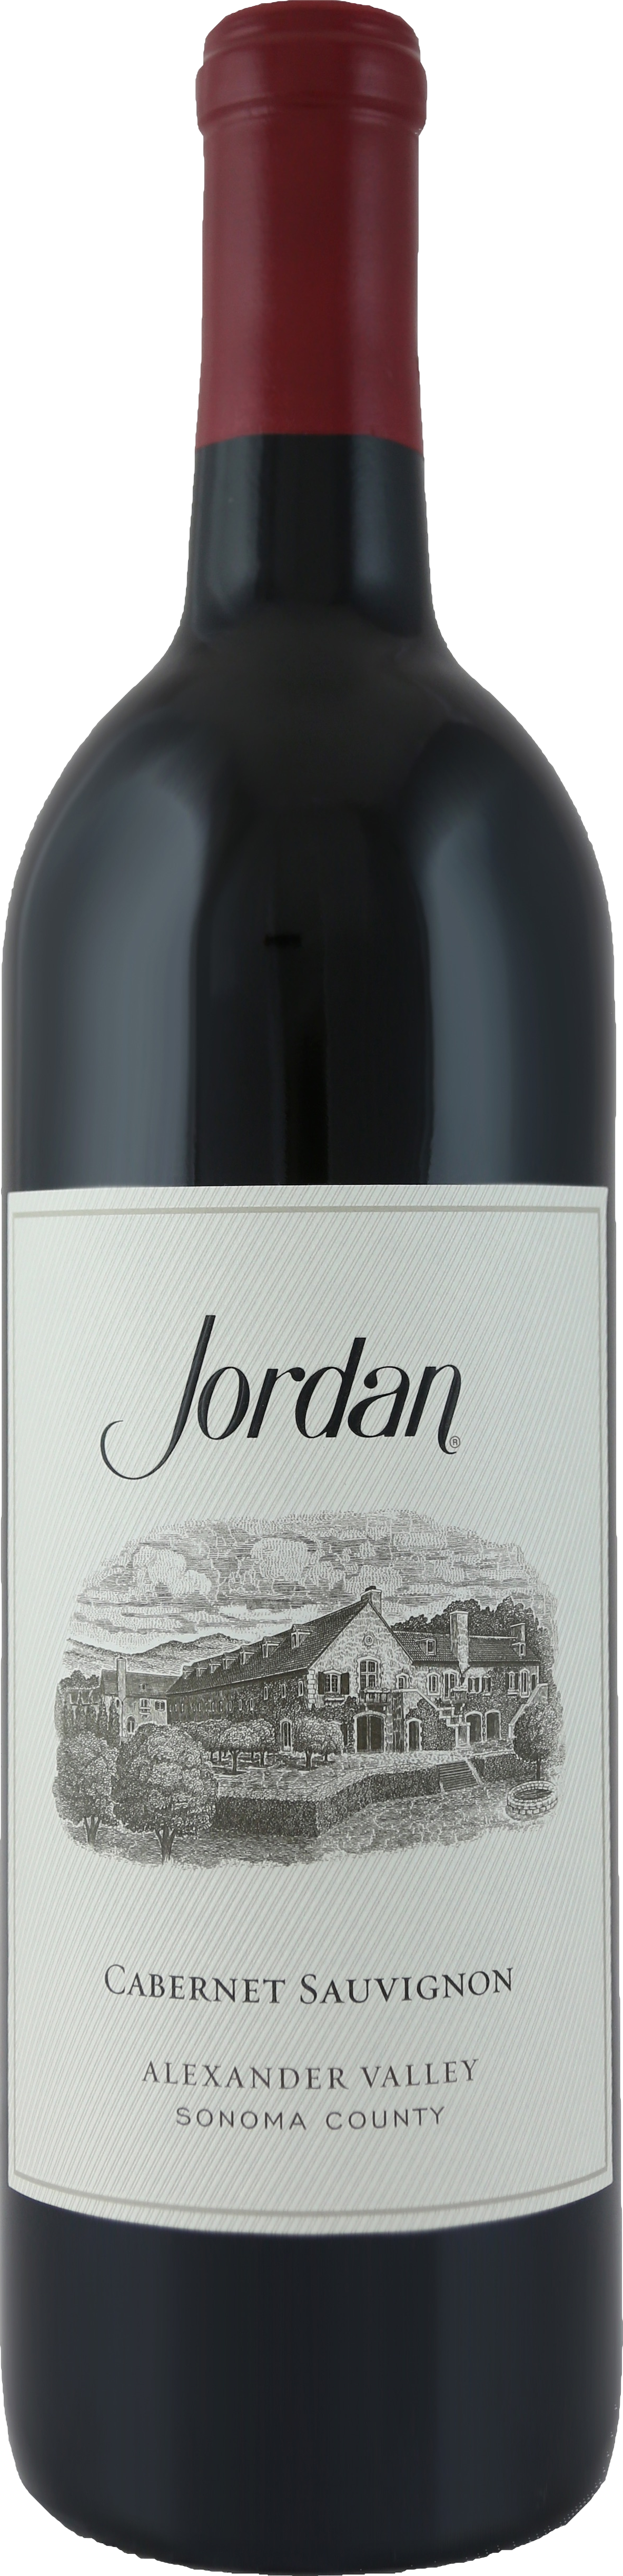 Jordan Winery Cabernet Sauvignon 2017